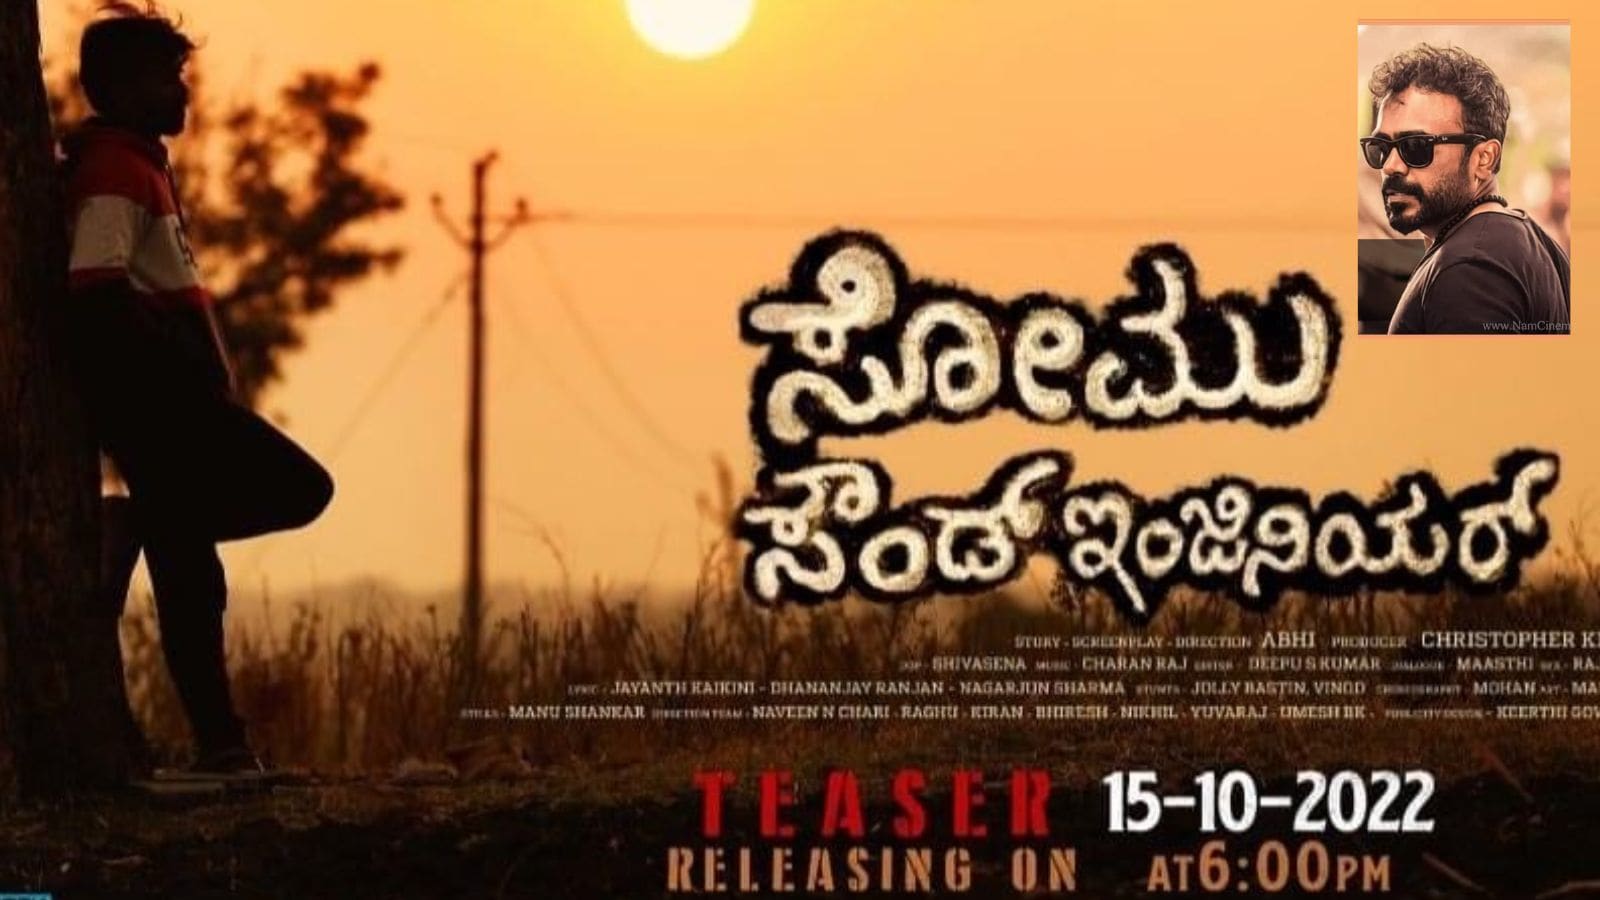 Kannada New Film Somu Sound Engineer Teaser Release On this 15th October |  ದುನಿಯಾ ಸೂರಿ ಶಿಷ್ಯನ ಹೊಸ ಸೌಂಡ್, ಇದೇ 15ಕ್ಕೆ ಸೋಮು ಸೌಂಡ್ ಇಂಜಿನಿಯರ್ ಟೀಸರ್– News18  Kannada